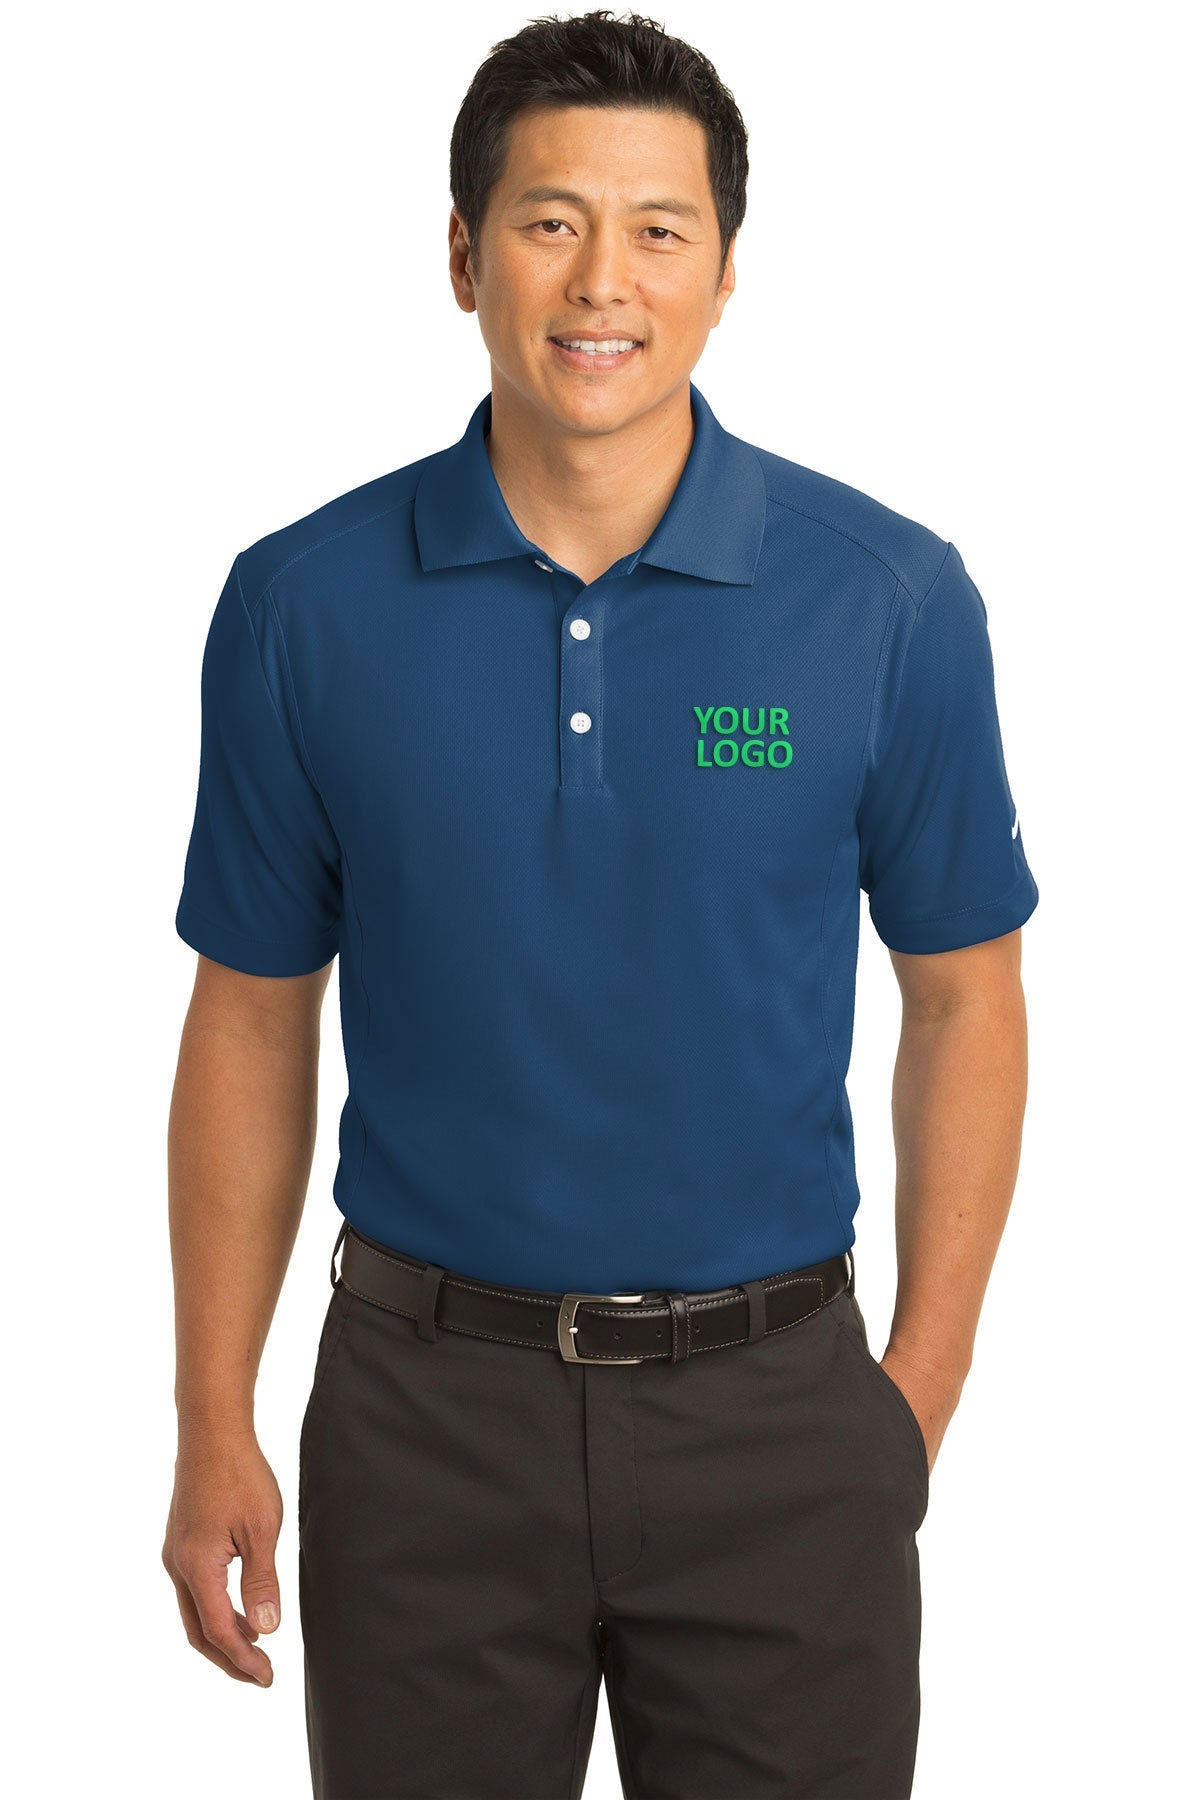 Nike Court Blue 267020 custom polo shirts for work